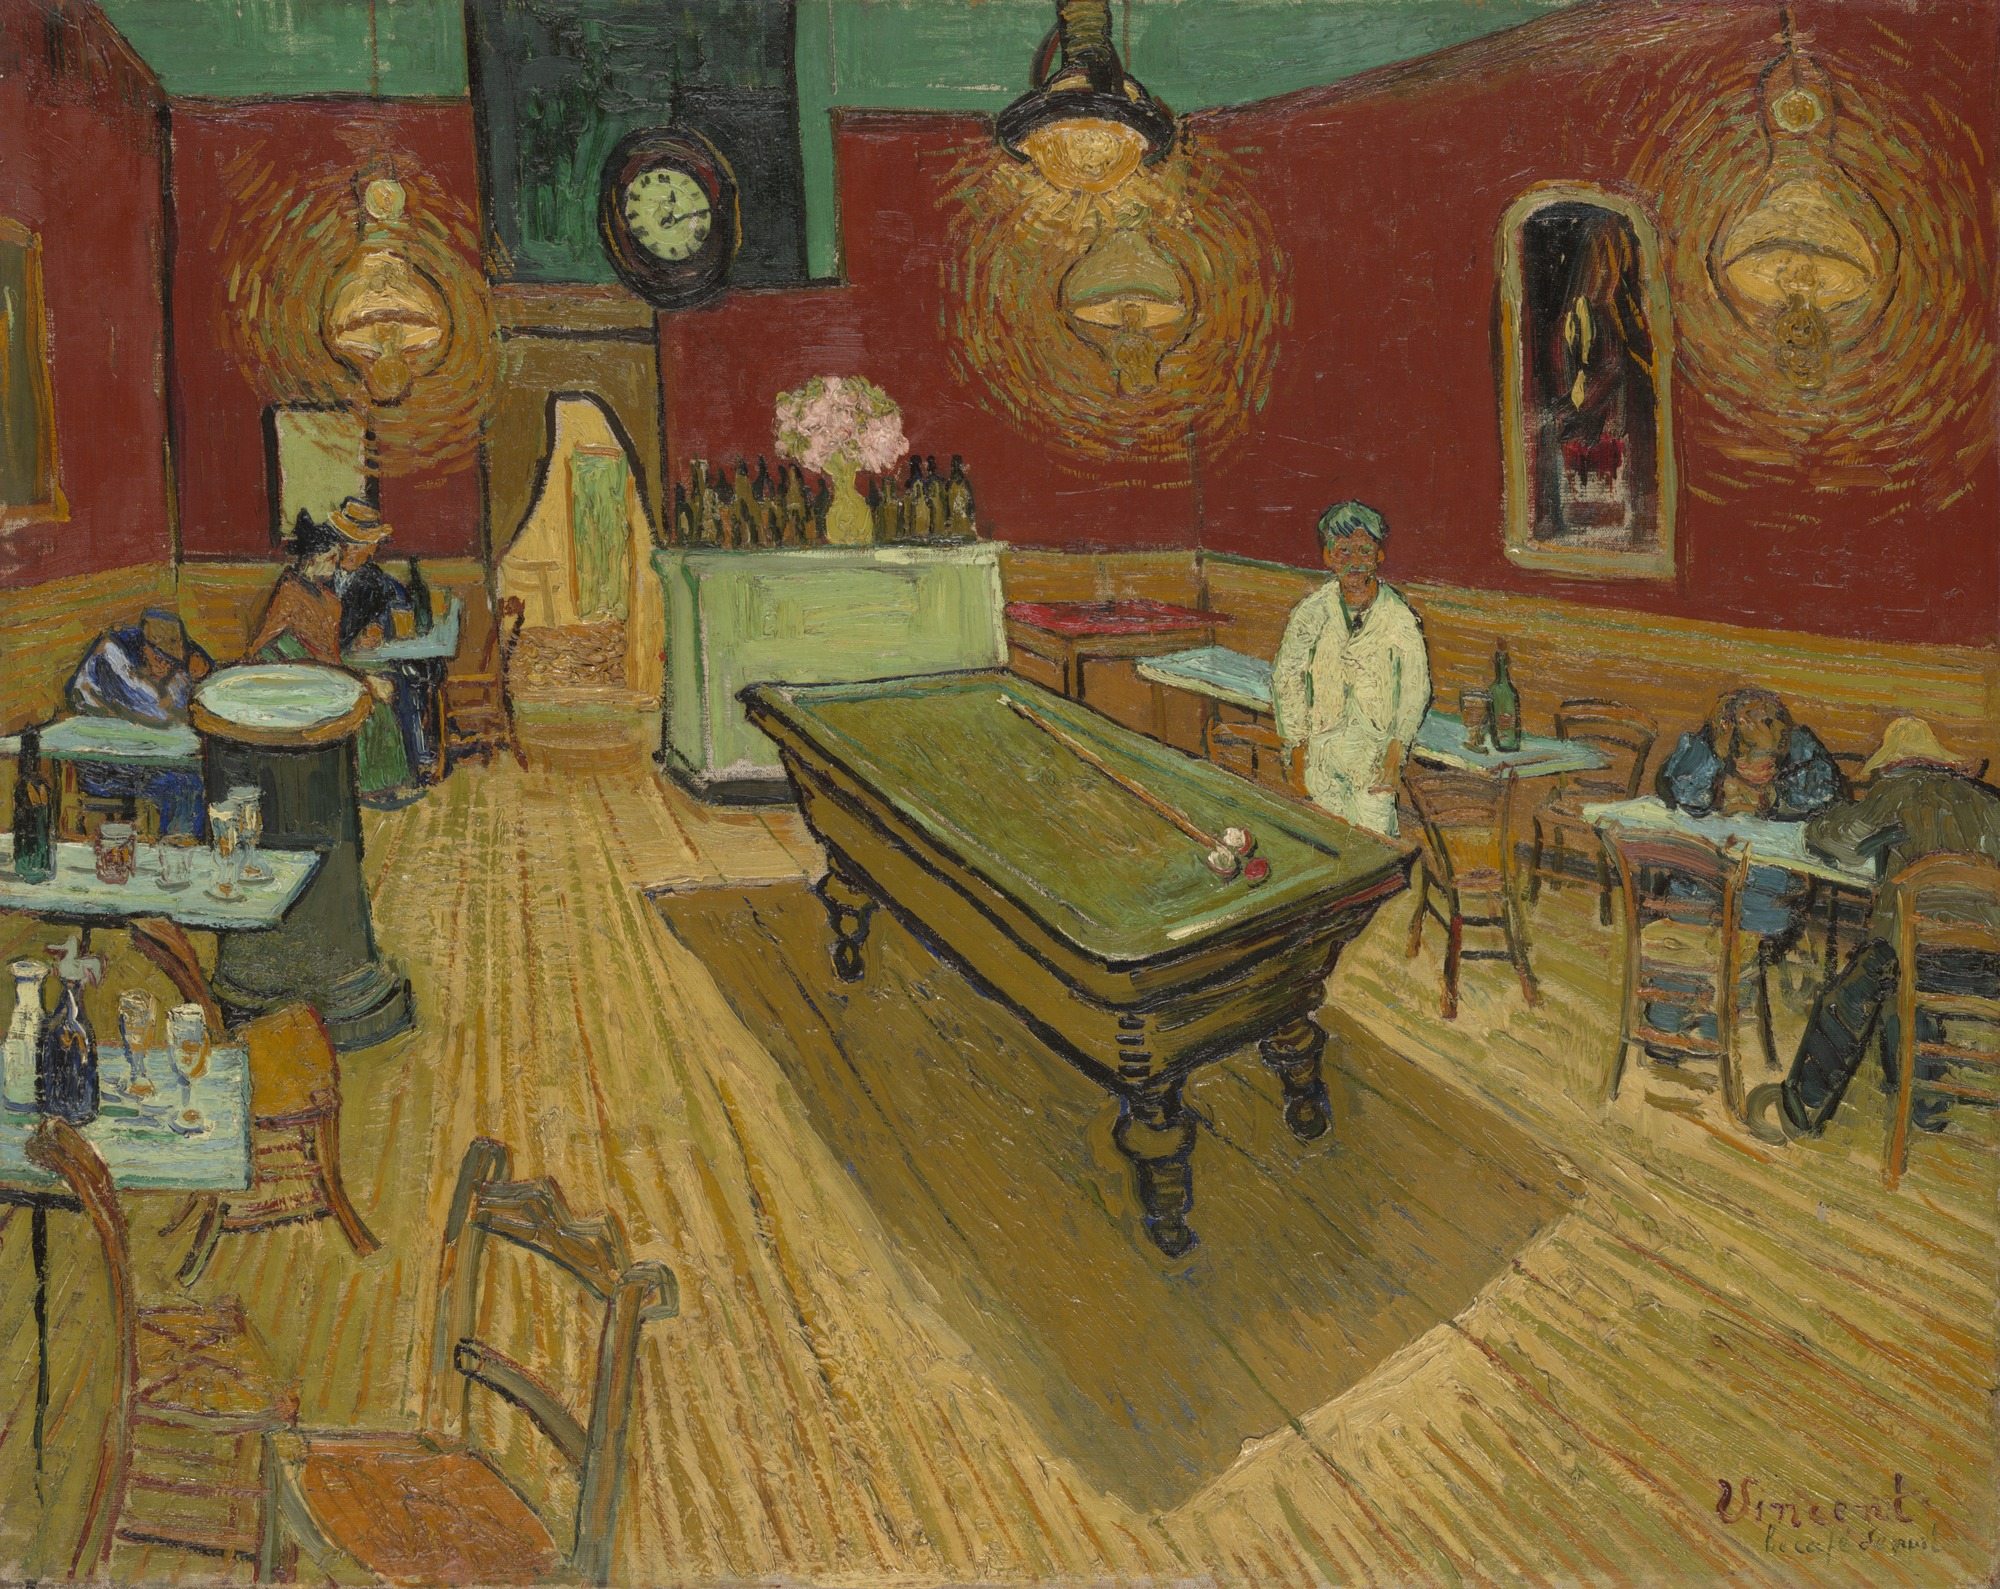 The Night Café by Vincent van Gogh - 1888 - 72.4 × 92.1 cm Yale University Art Gallery